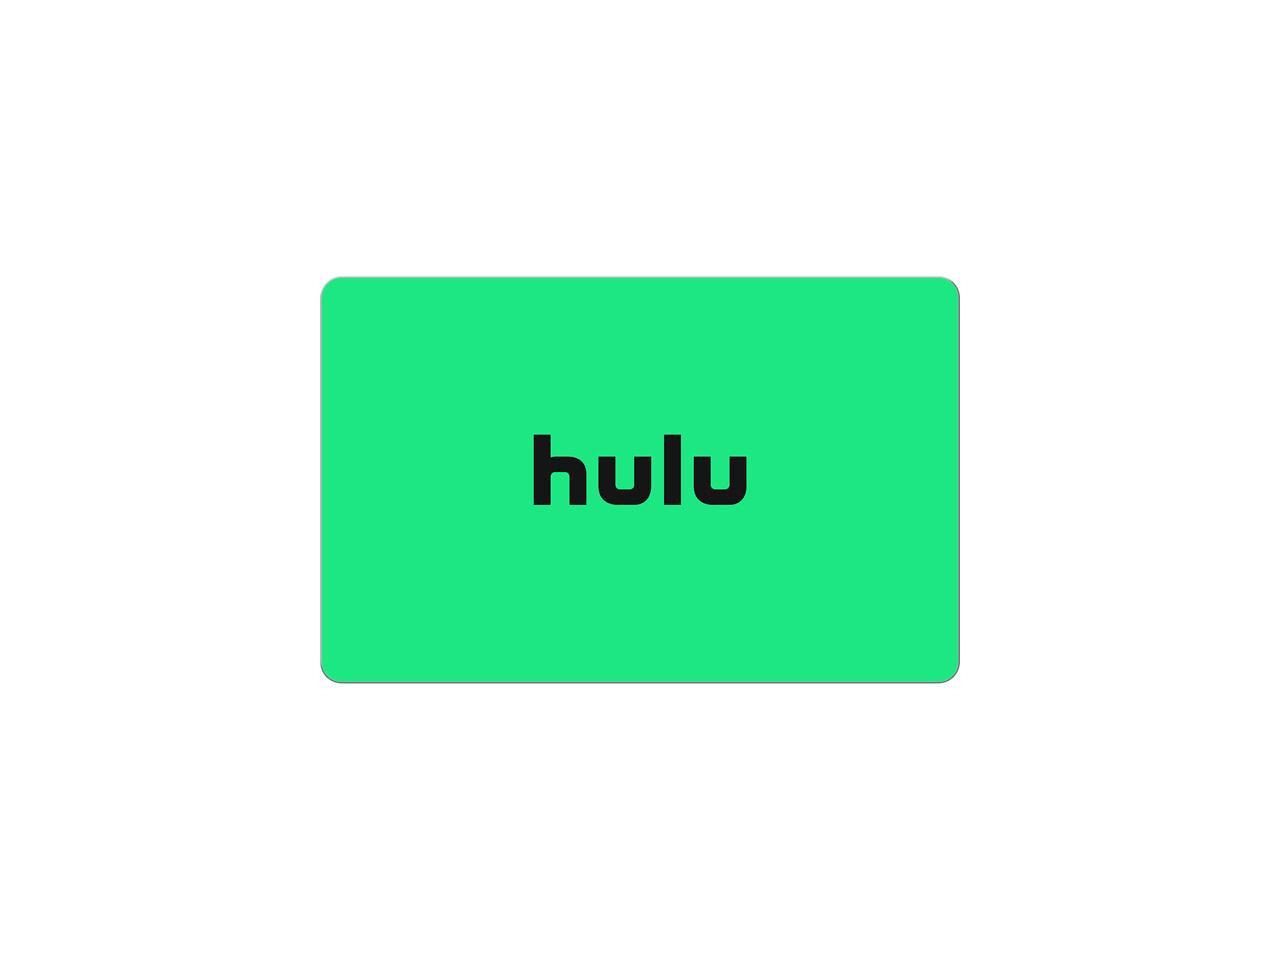 clicker for hulu